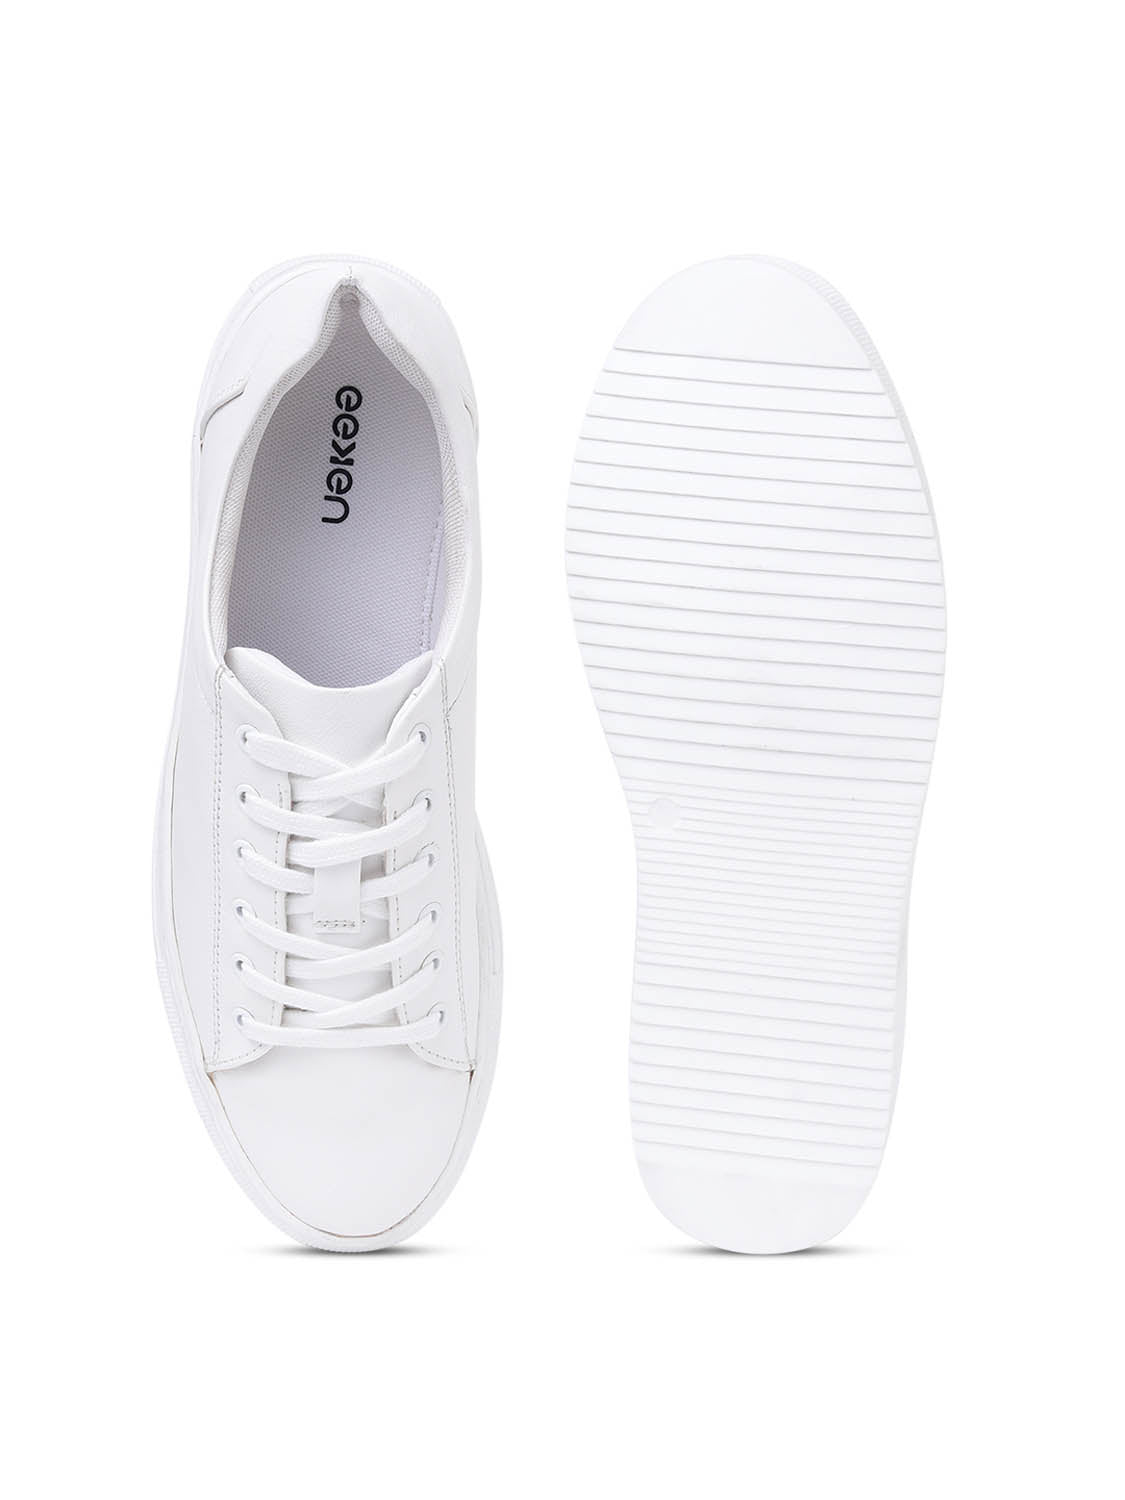 Eeken Sneakers For Men (White)